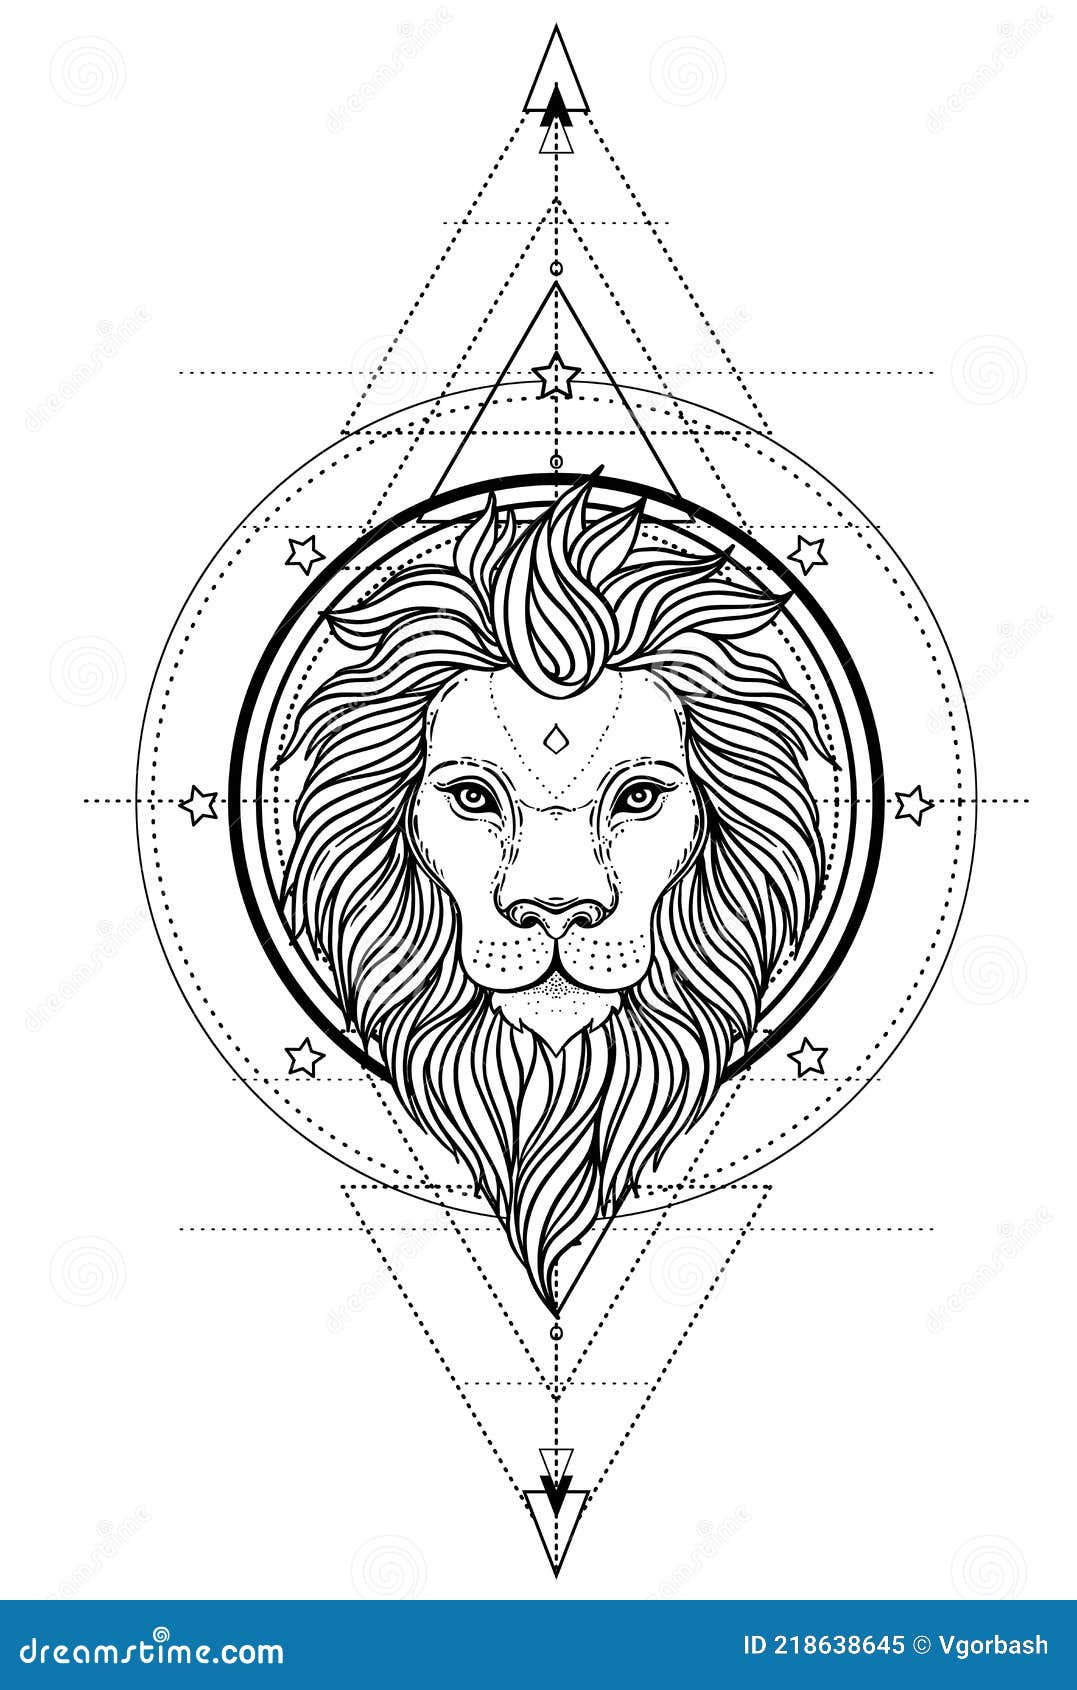 Ornate Lion Head Over Sacred Geometry African Indian Totem Tattoo  Sticker Design Stock Vector  Illustration of roaring logo 218638645